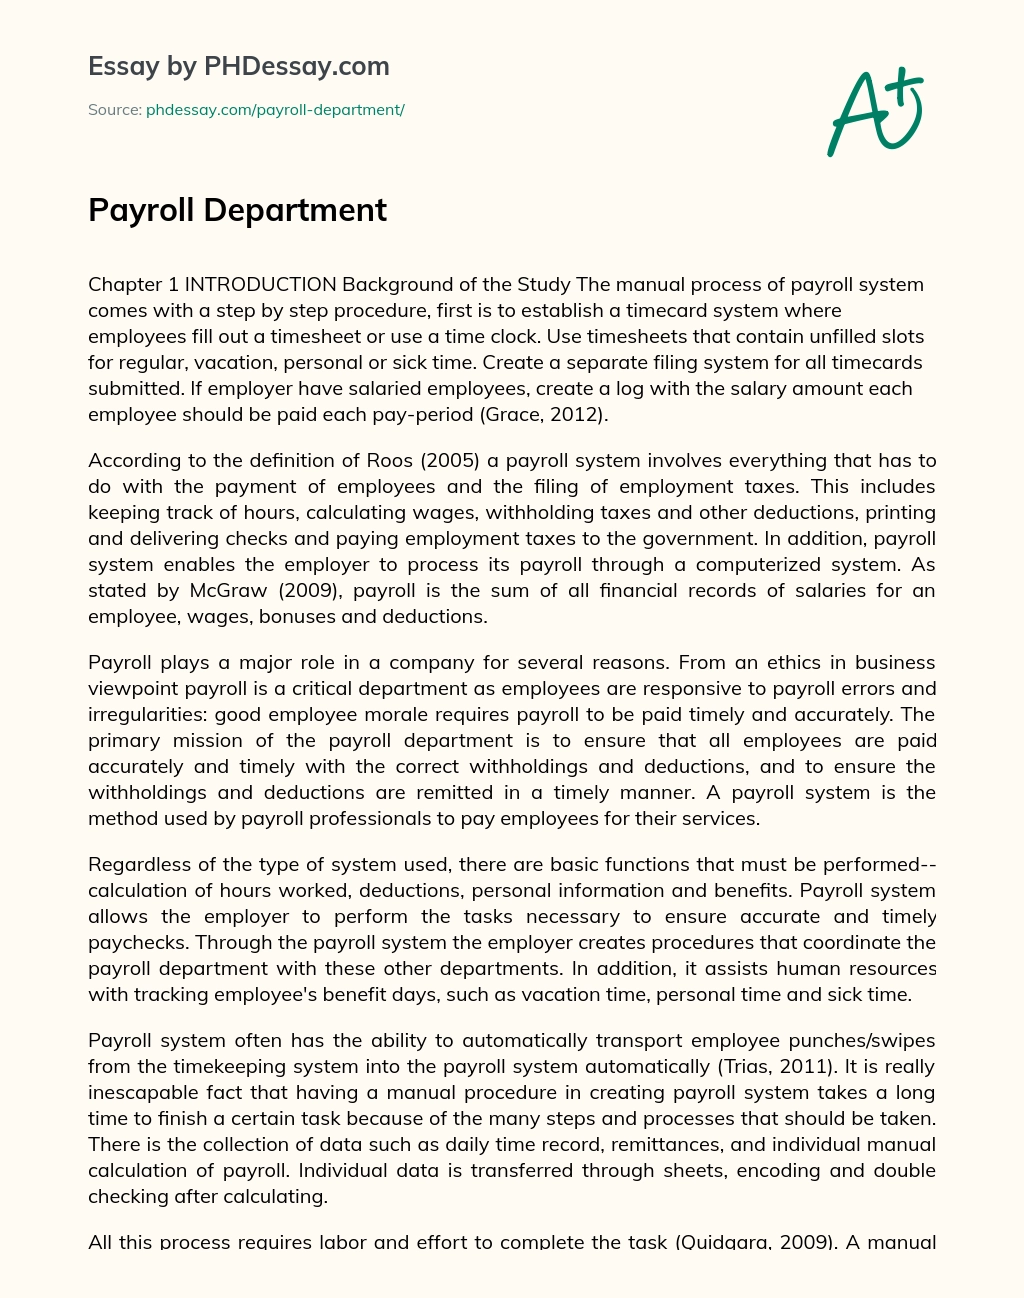 Payroll Department essay